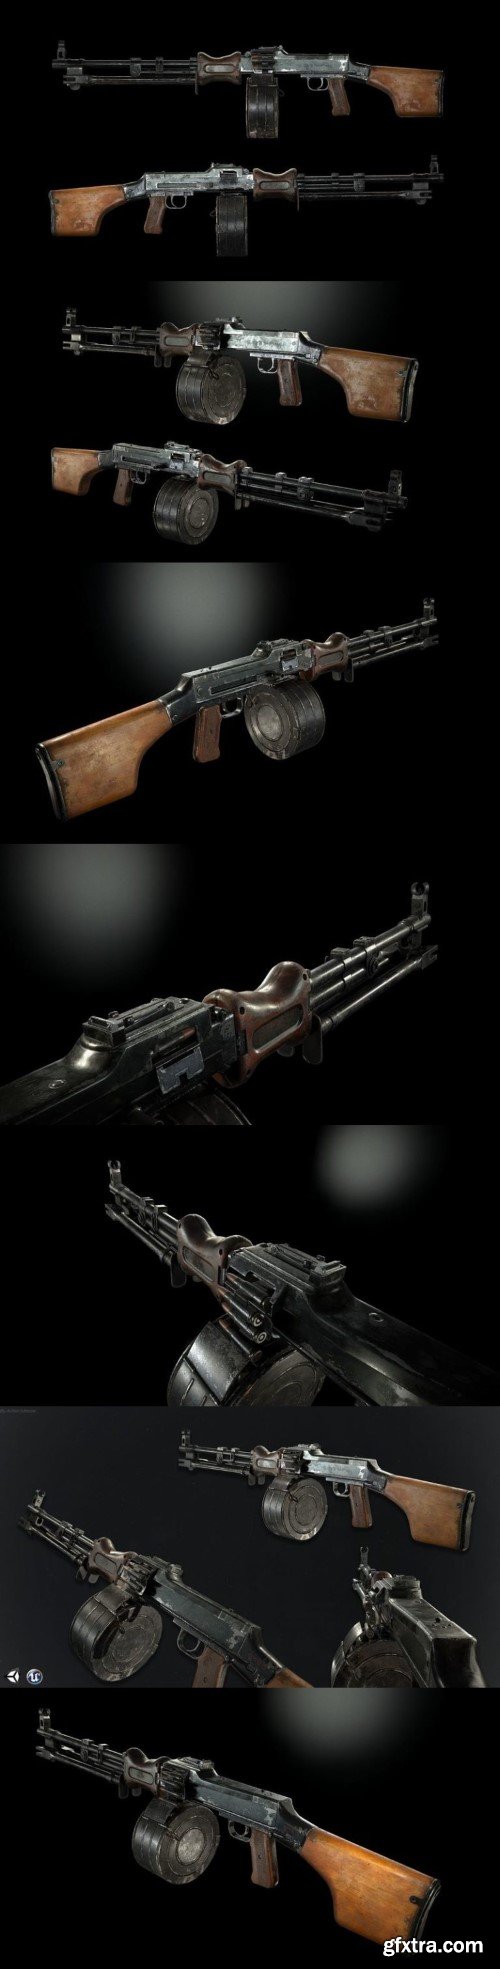 Degtyarev light machine gun – Soviet machinegun